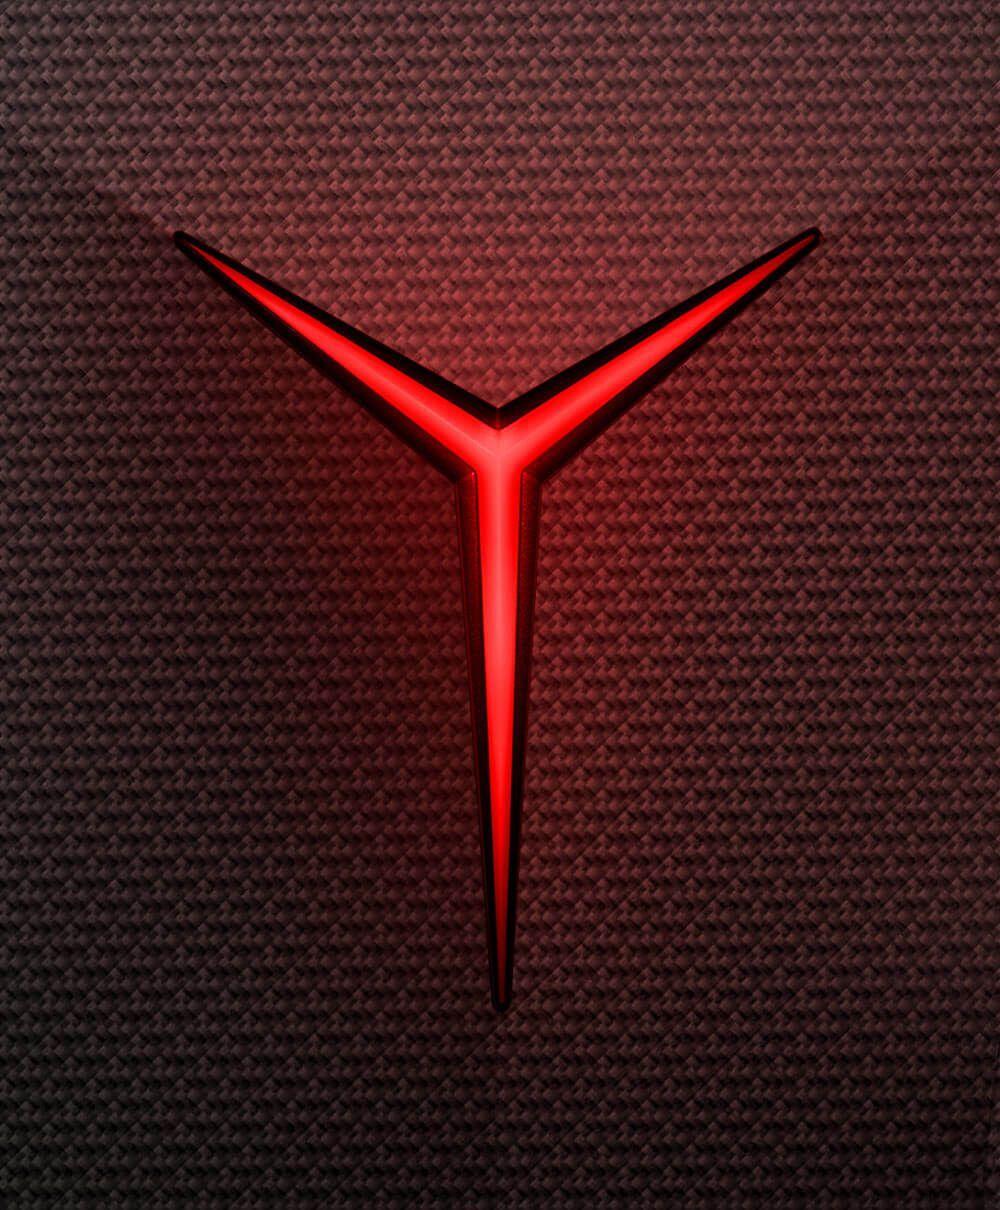 Red Lenovo Logo - Y series gaming red wallpaper? | Lenovo alternate logo for gaming ...